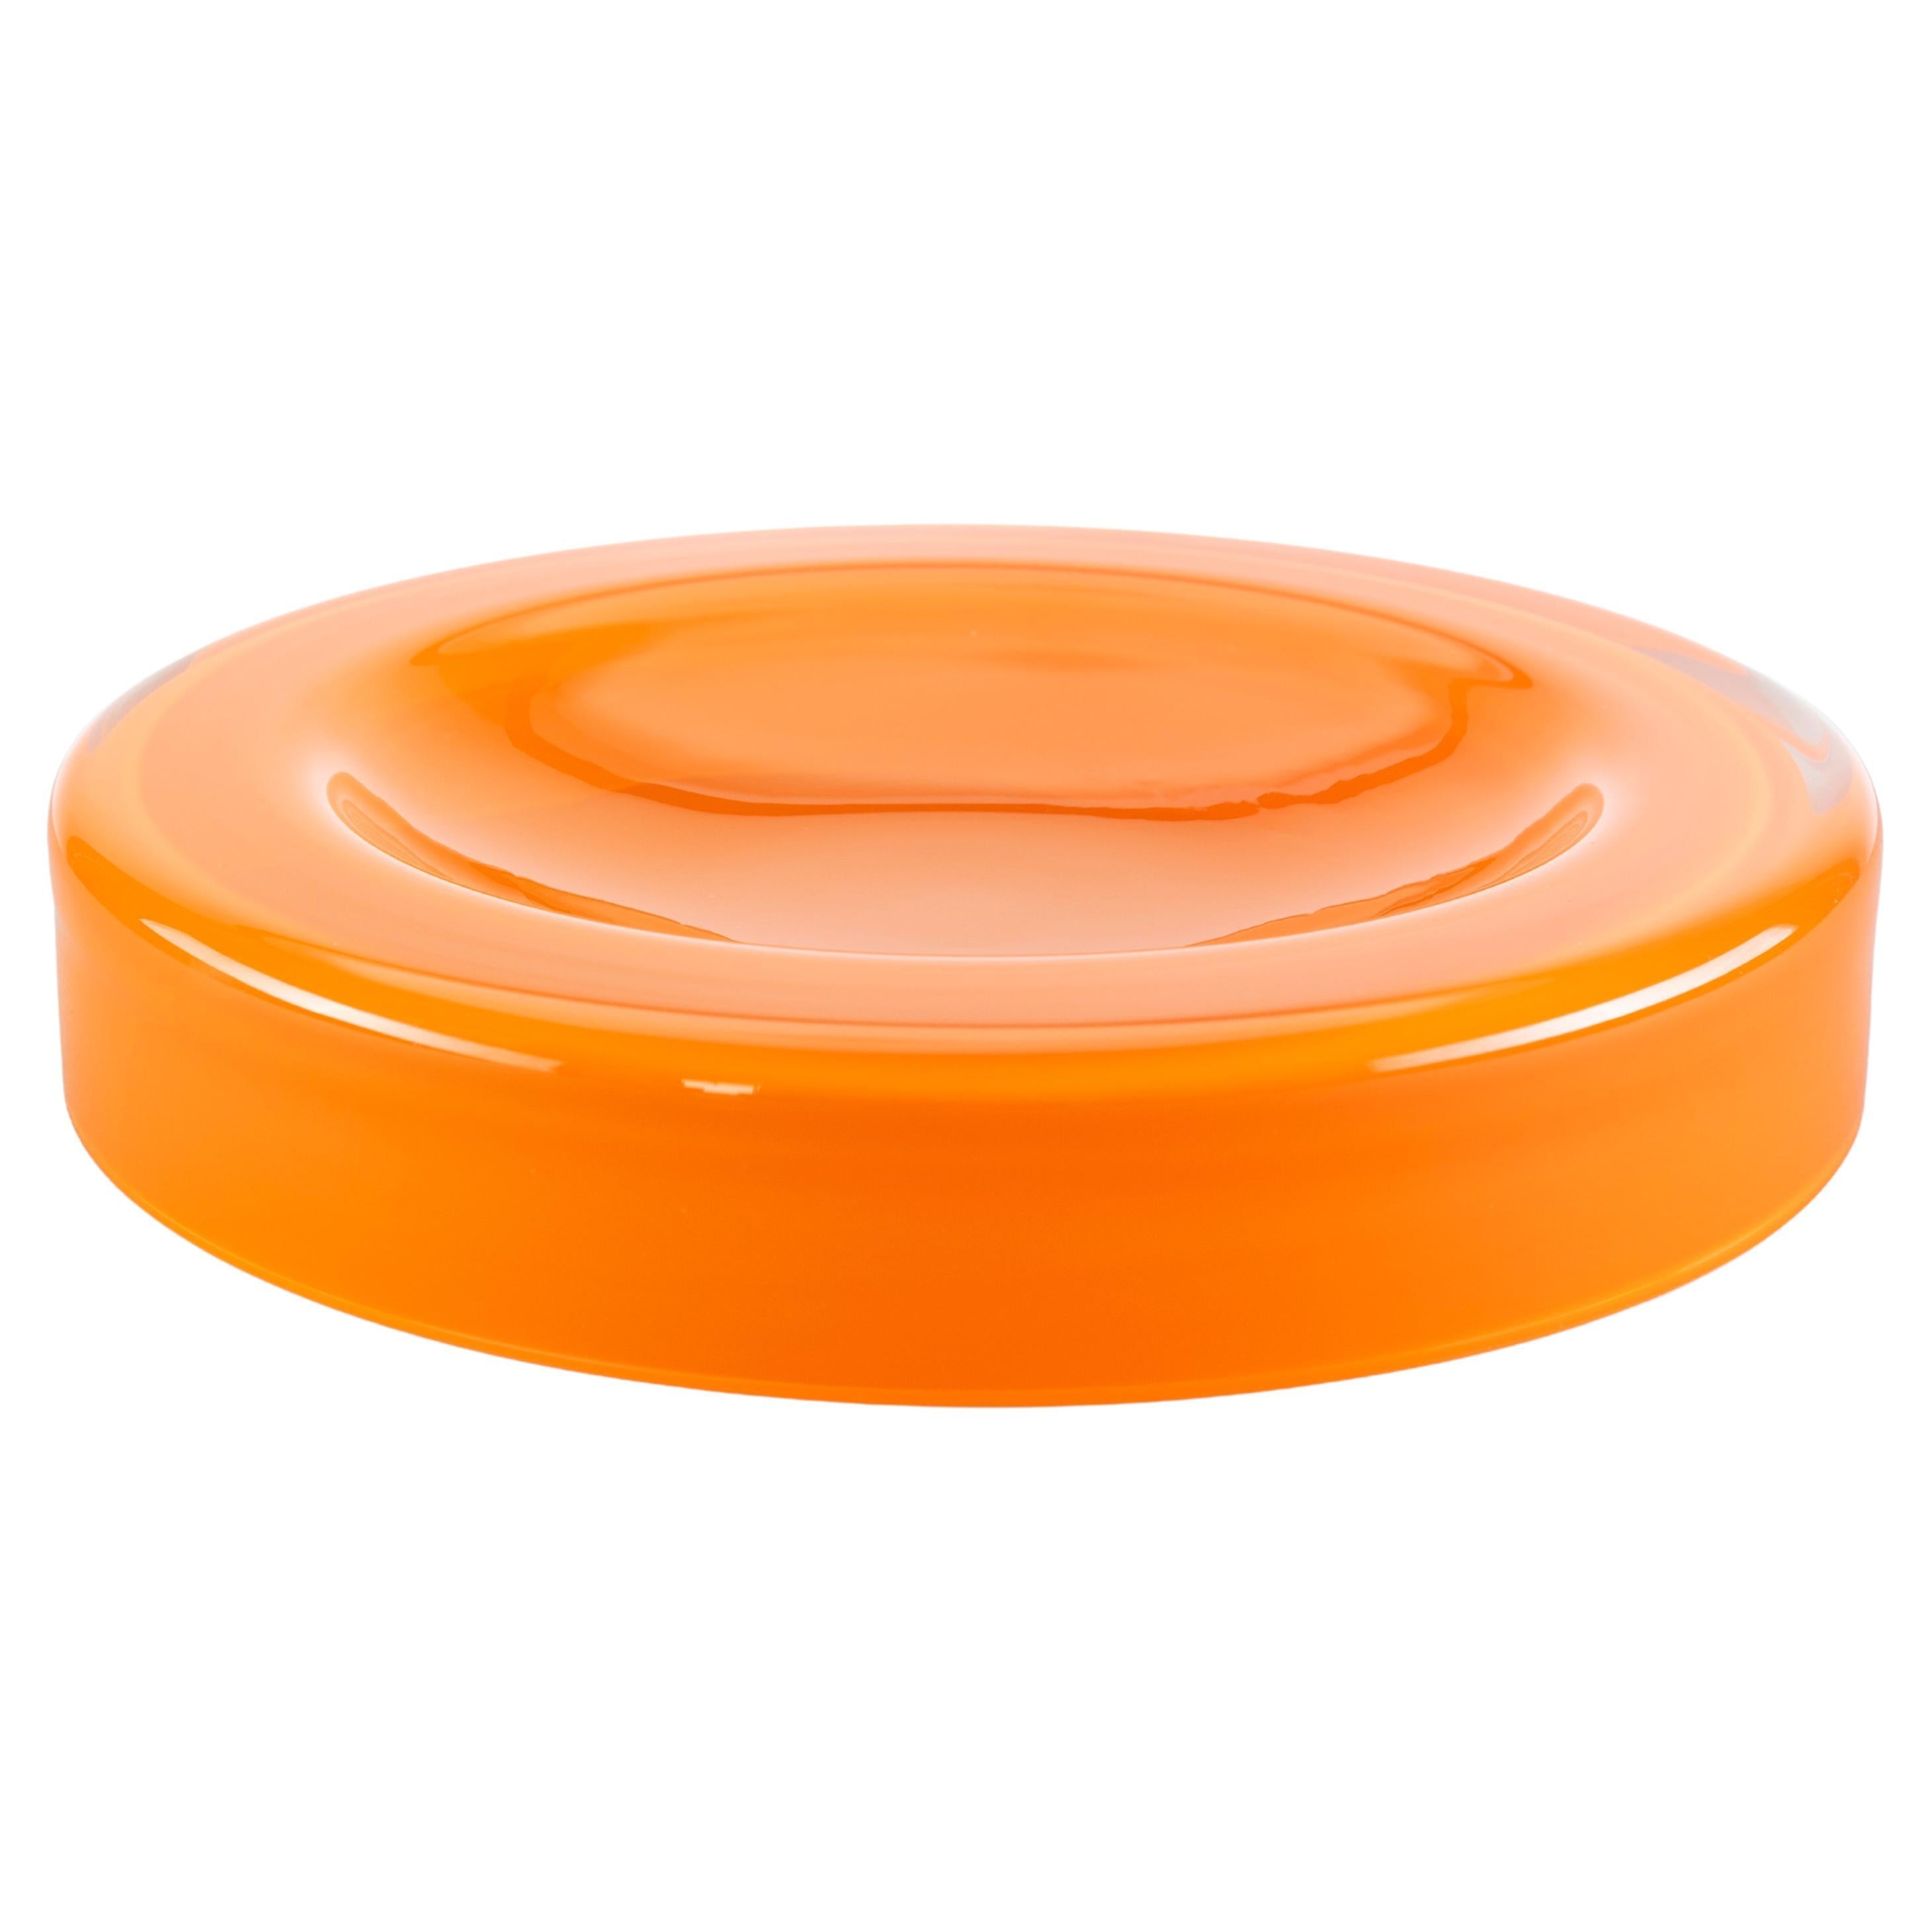 Mouthblown Glass Bowl from Bohemian Crystal, Fiery Orange by Ursula Futura